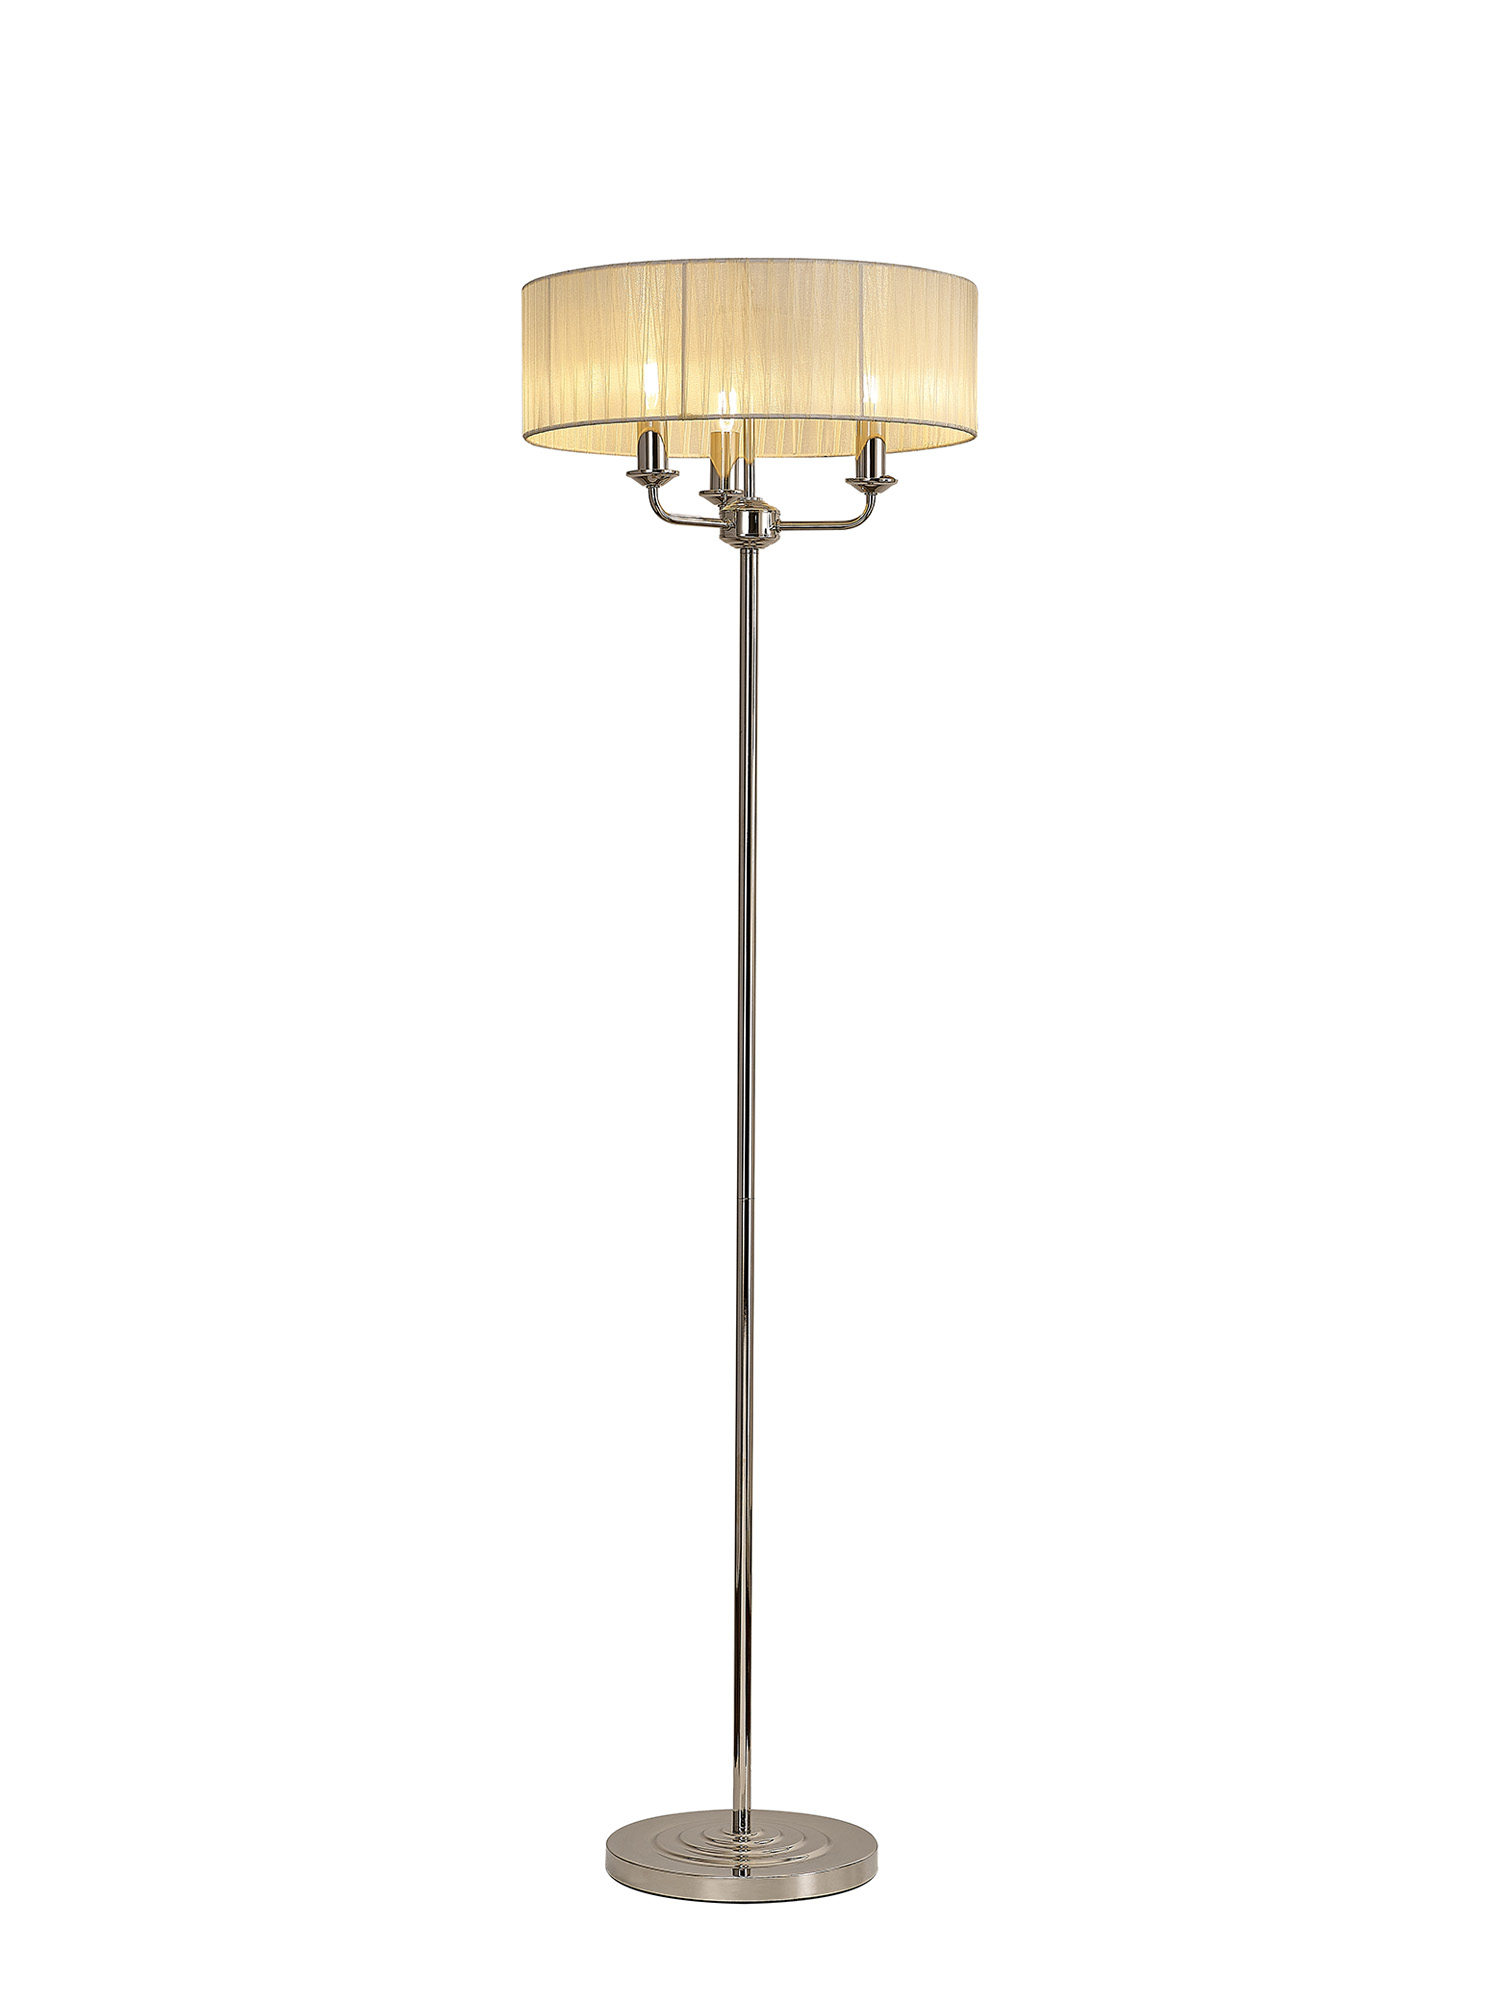 DK0887  Banyan 45cm 3 Light Floor Lamp Polished Nickel, Cream